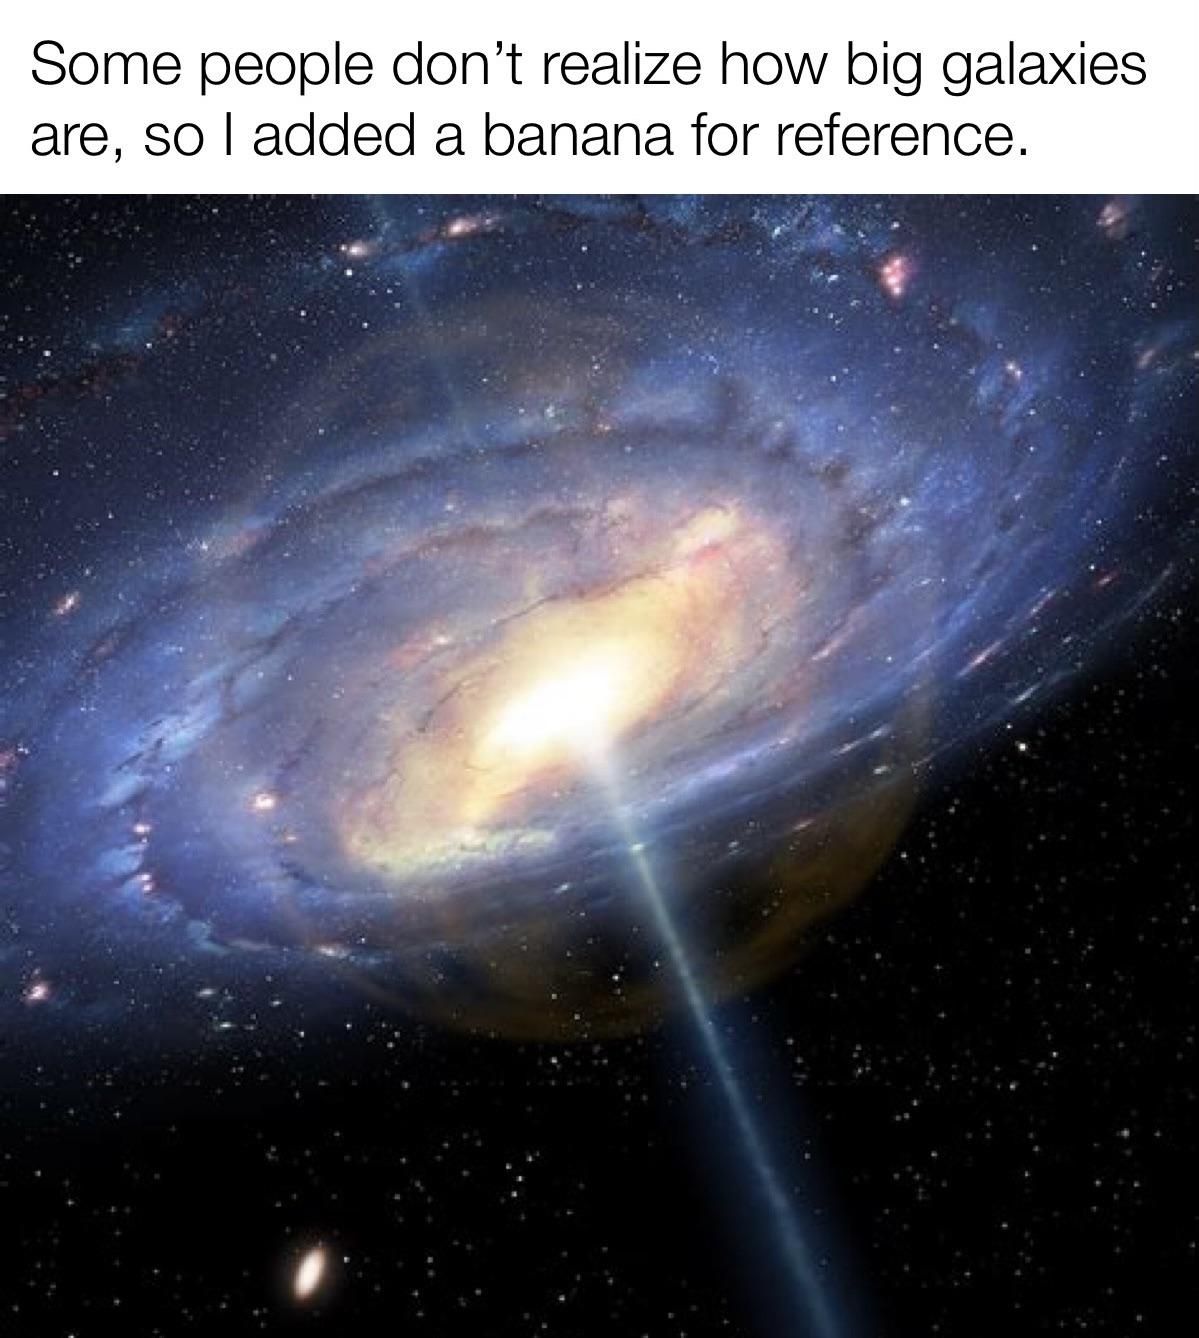 Galaxies are huge